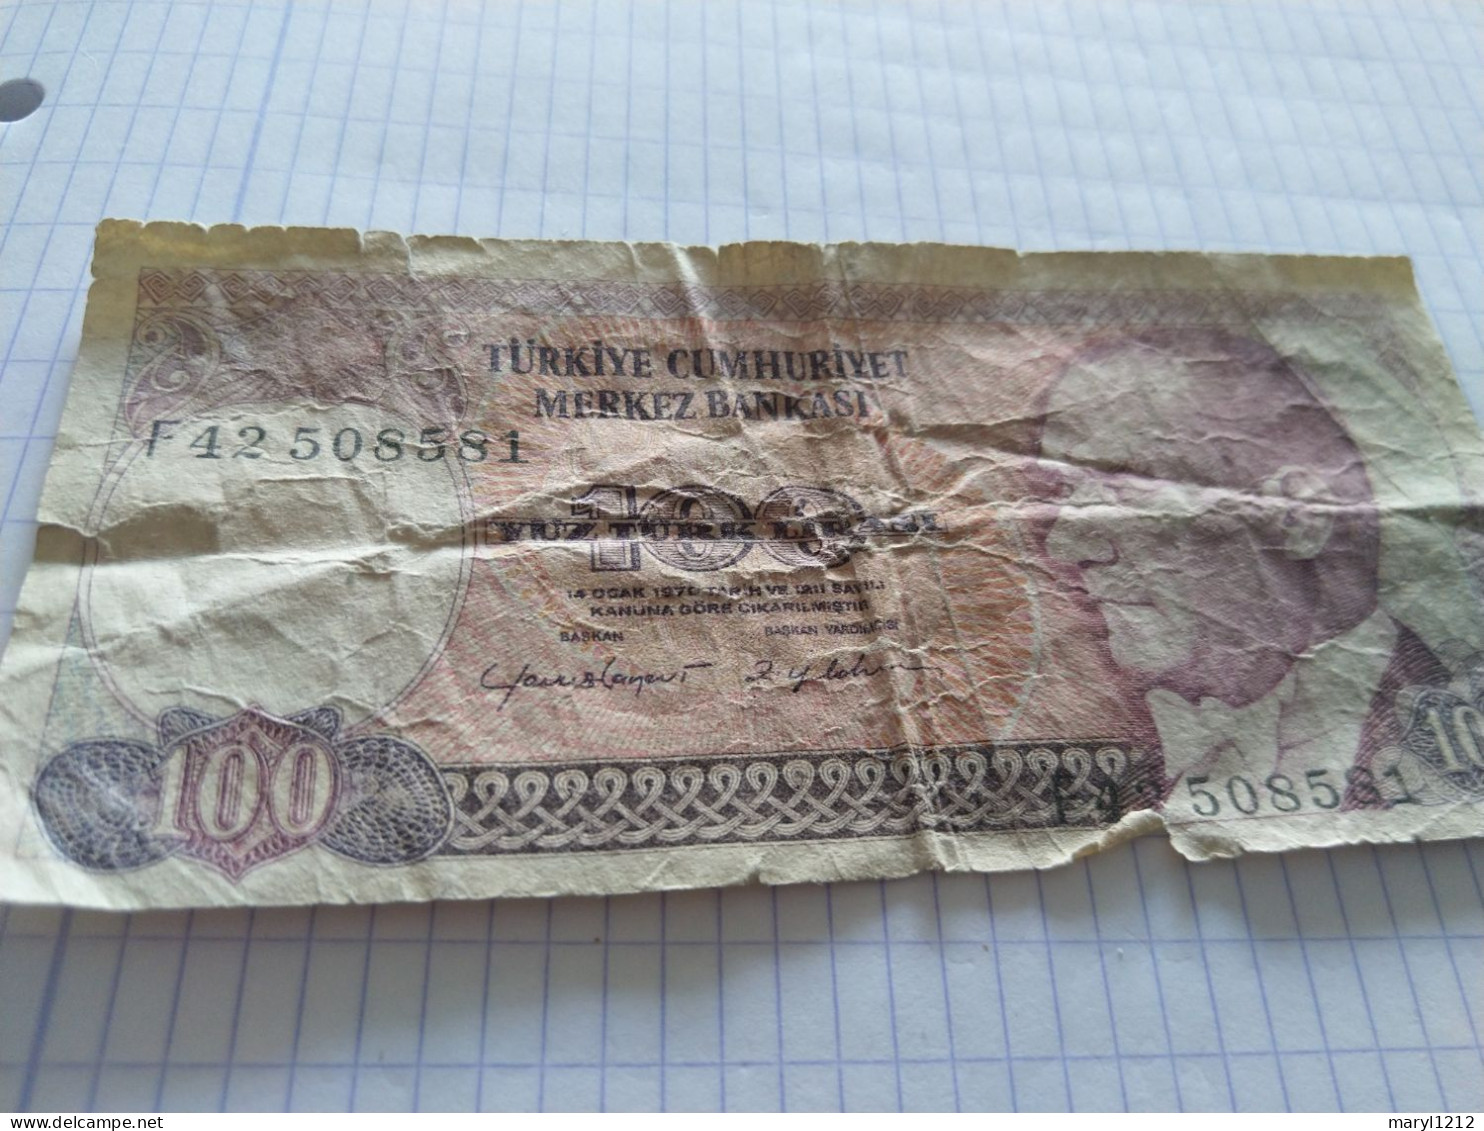 100 Yuz Turk Lerazi 1970 - Turkey